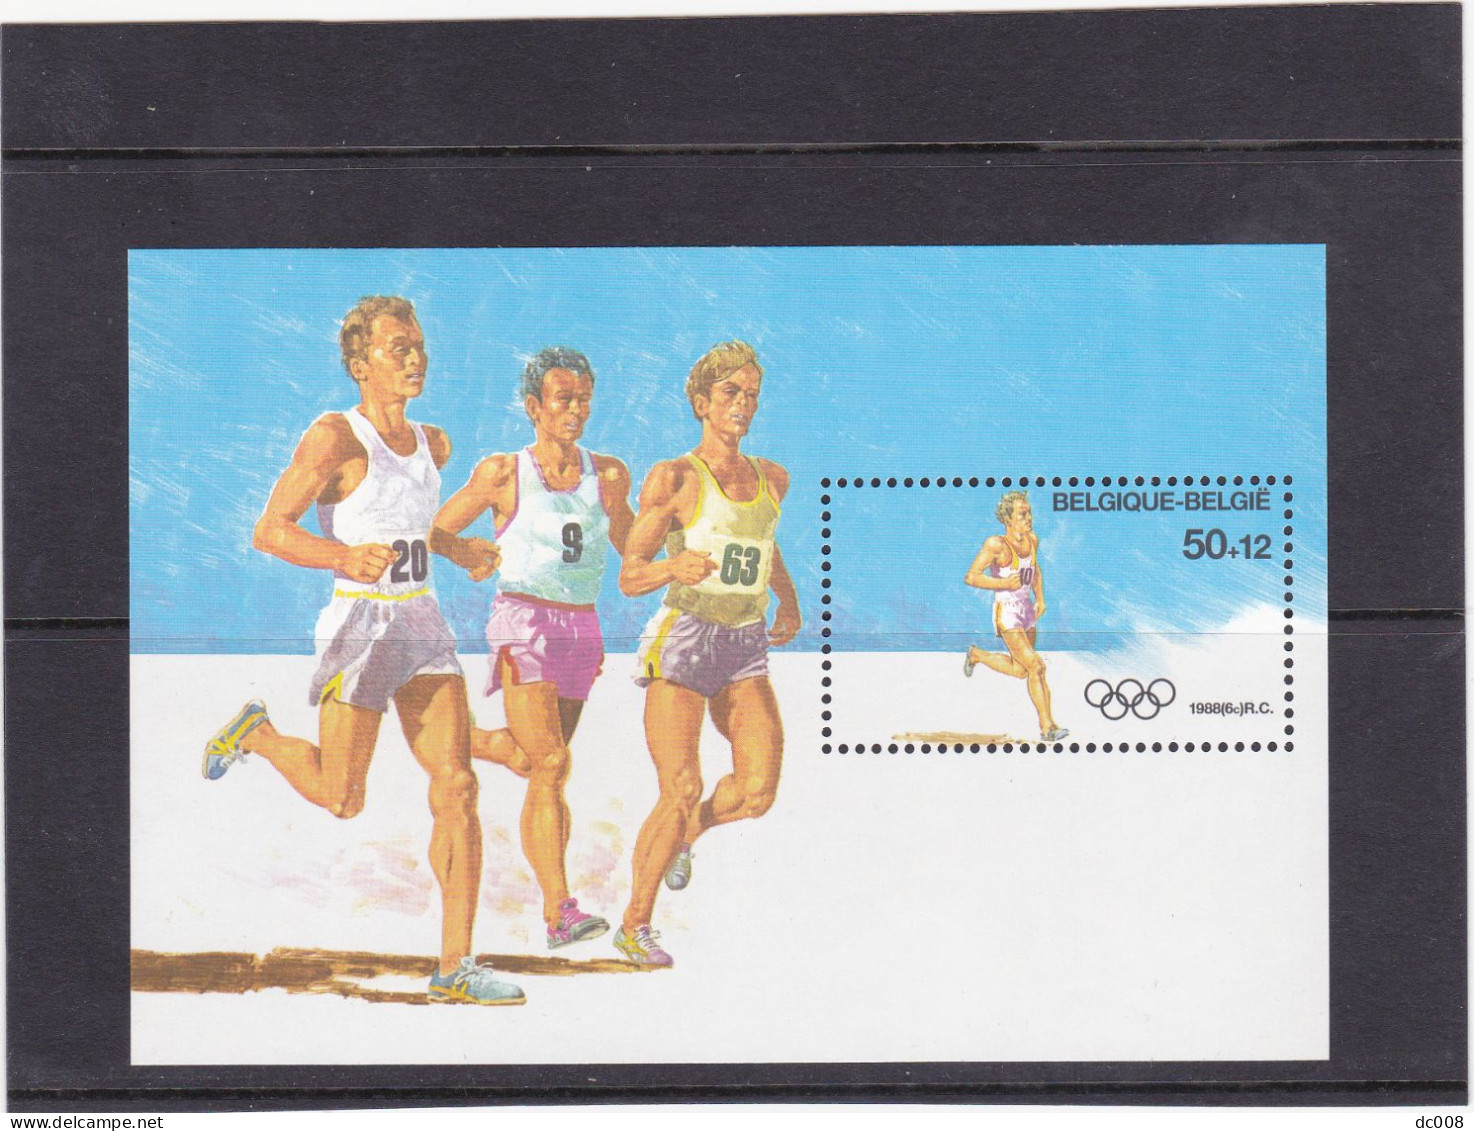 COB BL64 Olympische Spelen Seoul-Jeux Olympique Seoul-1988-MNH-postfris-neuf-10 Stuks/pieces - 1961-2001